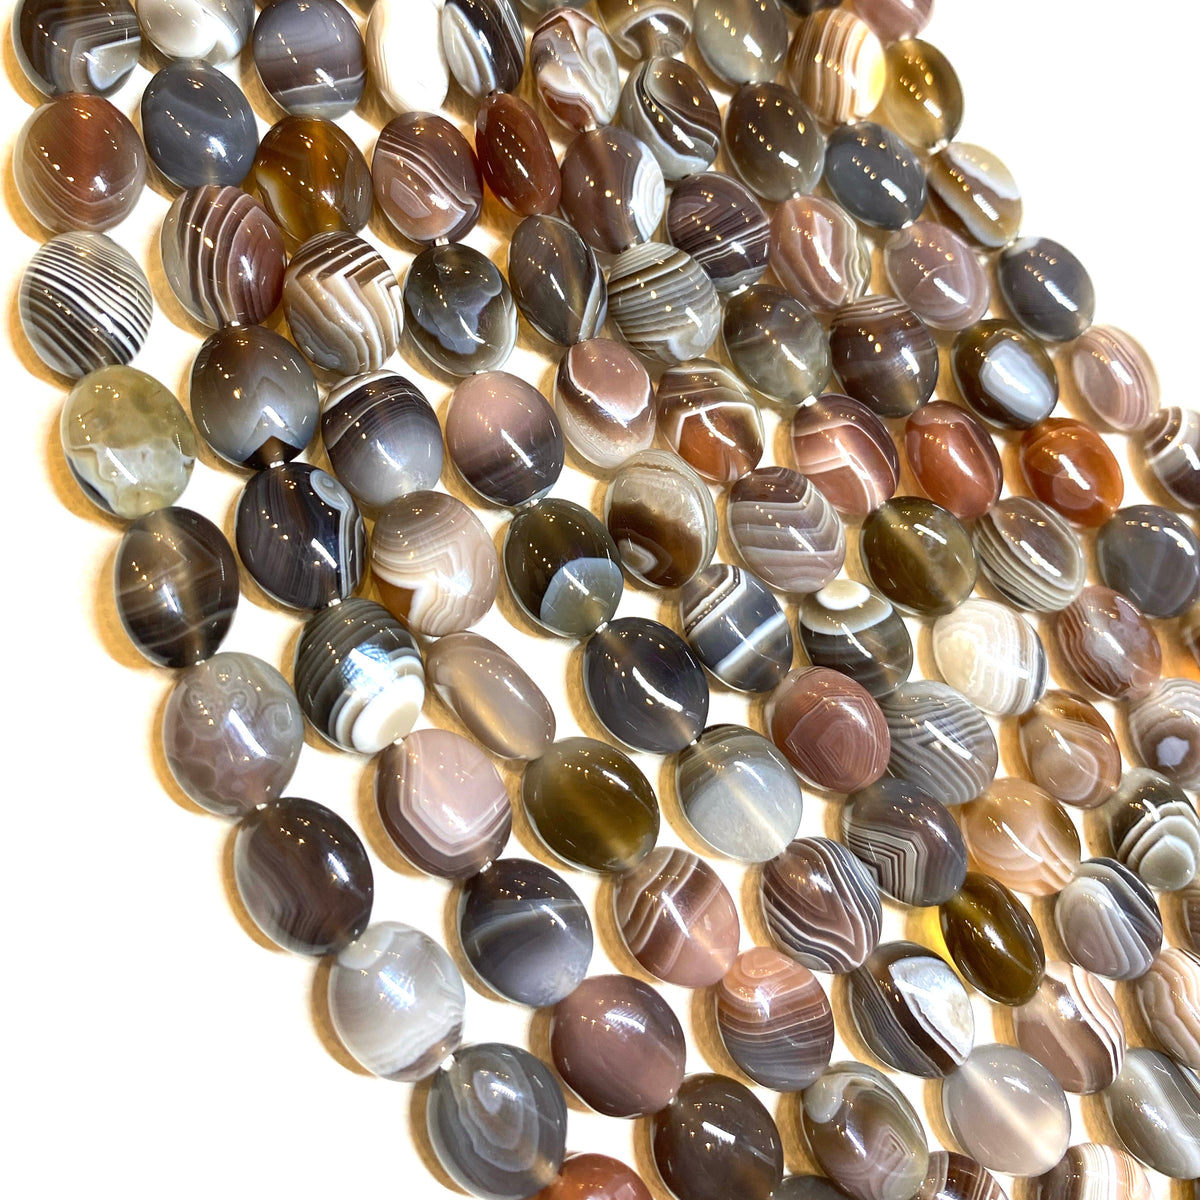 Botswana Agate Beads, Agate Gemstones